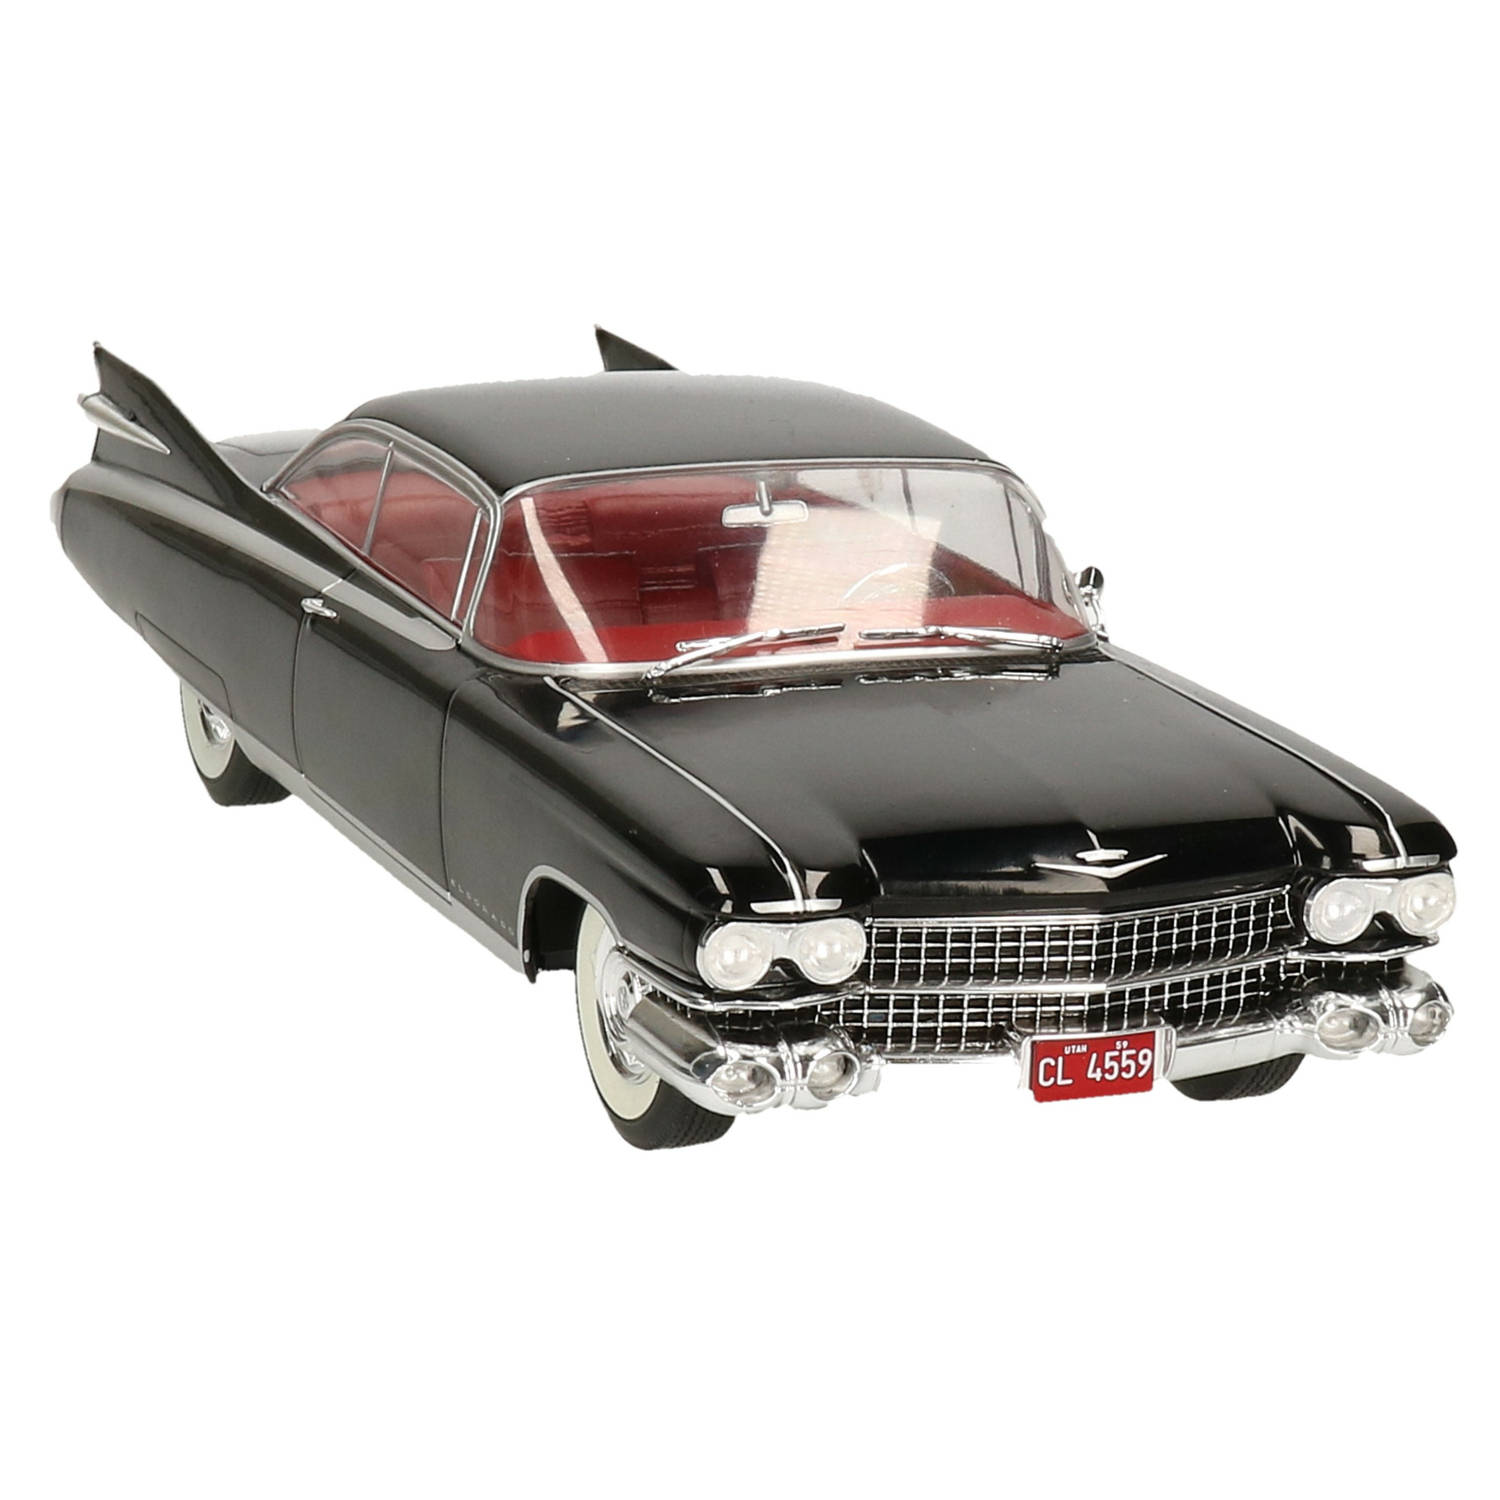 Modelauto-speelgoedauto Cadillac Eldorado 1959 zwart schaal 1:24-24 x 8 x 5 cm Speelgoed auto's